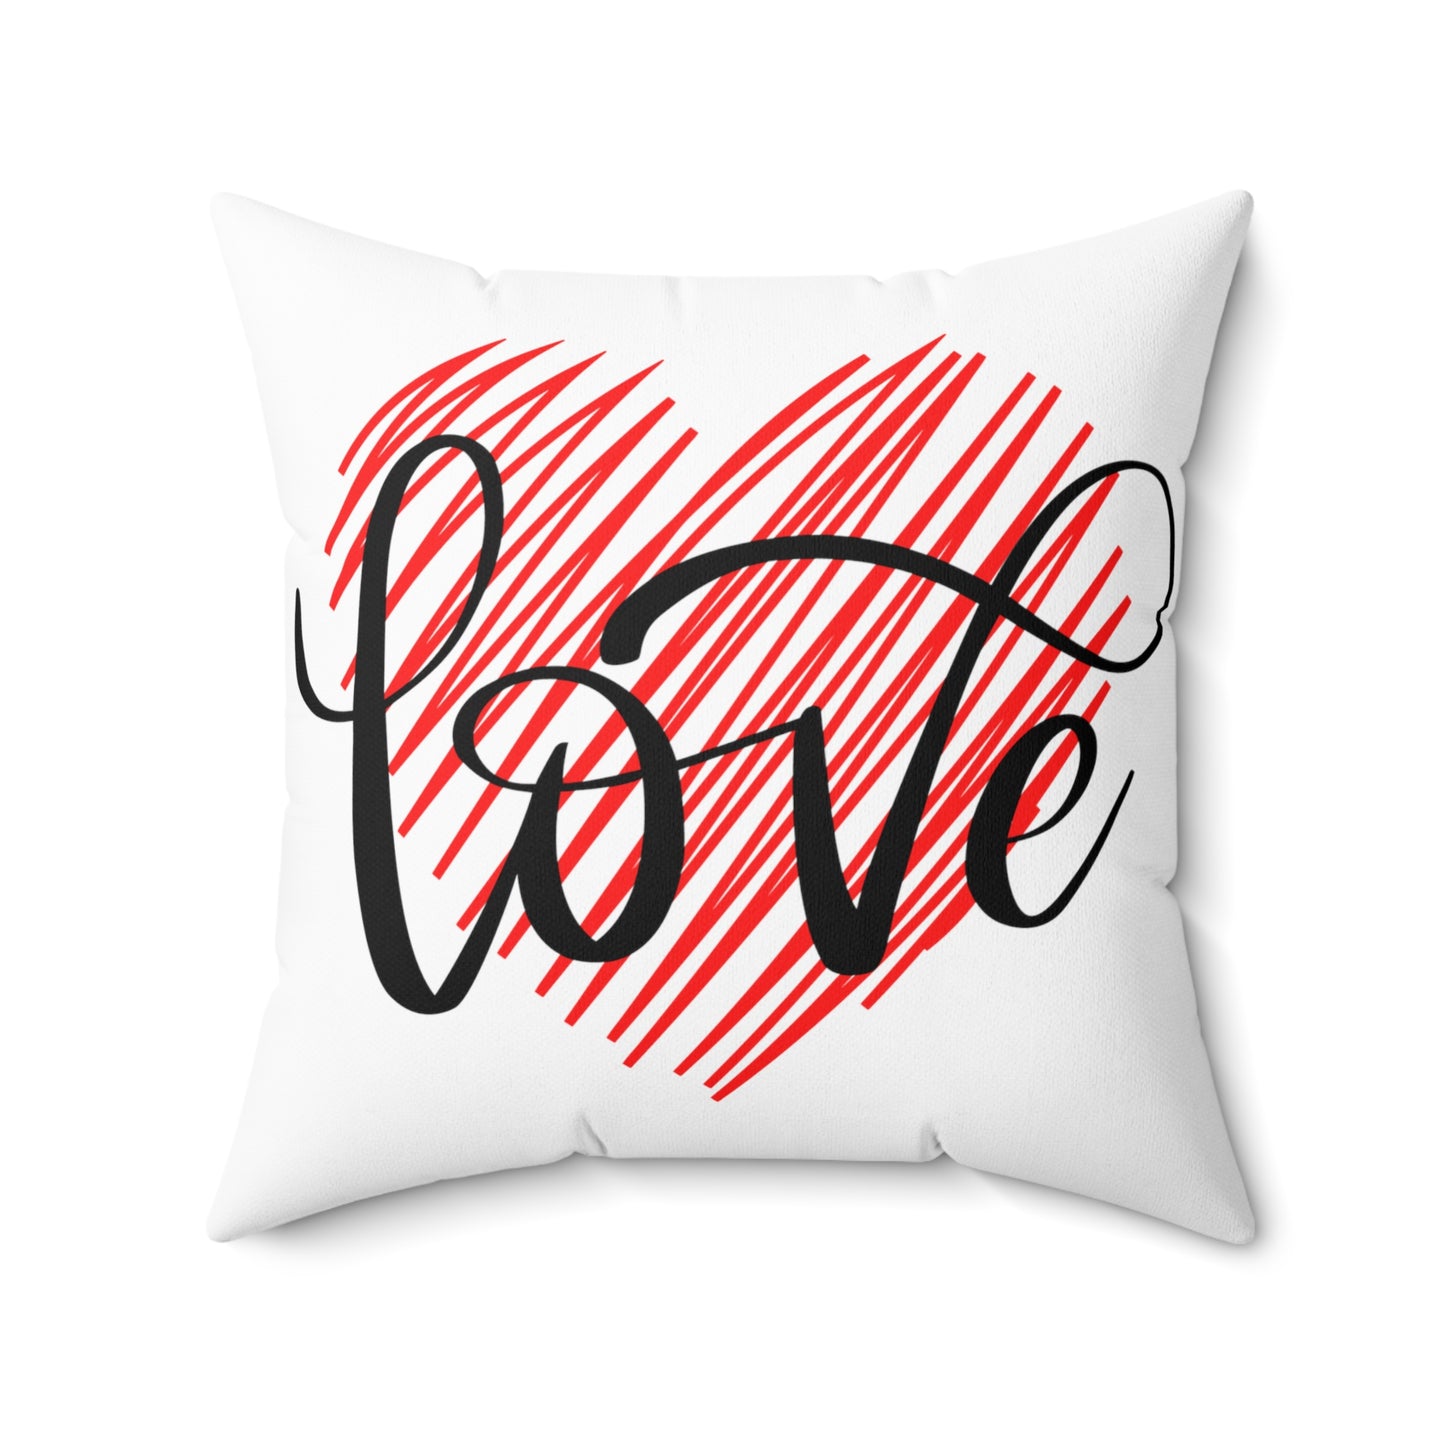 Love inside Heart Printed Pillow Case for Valentine Gift